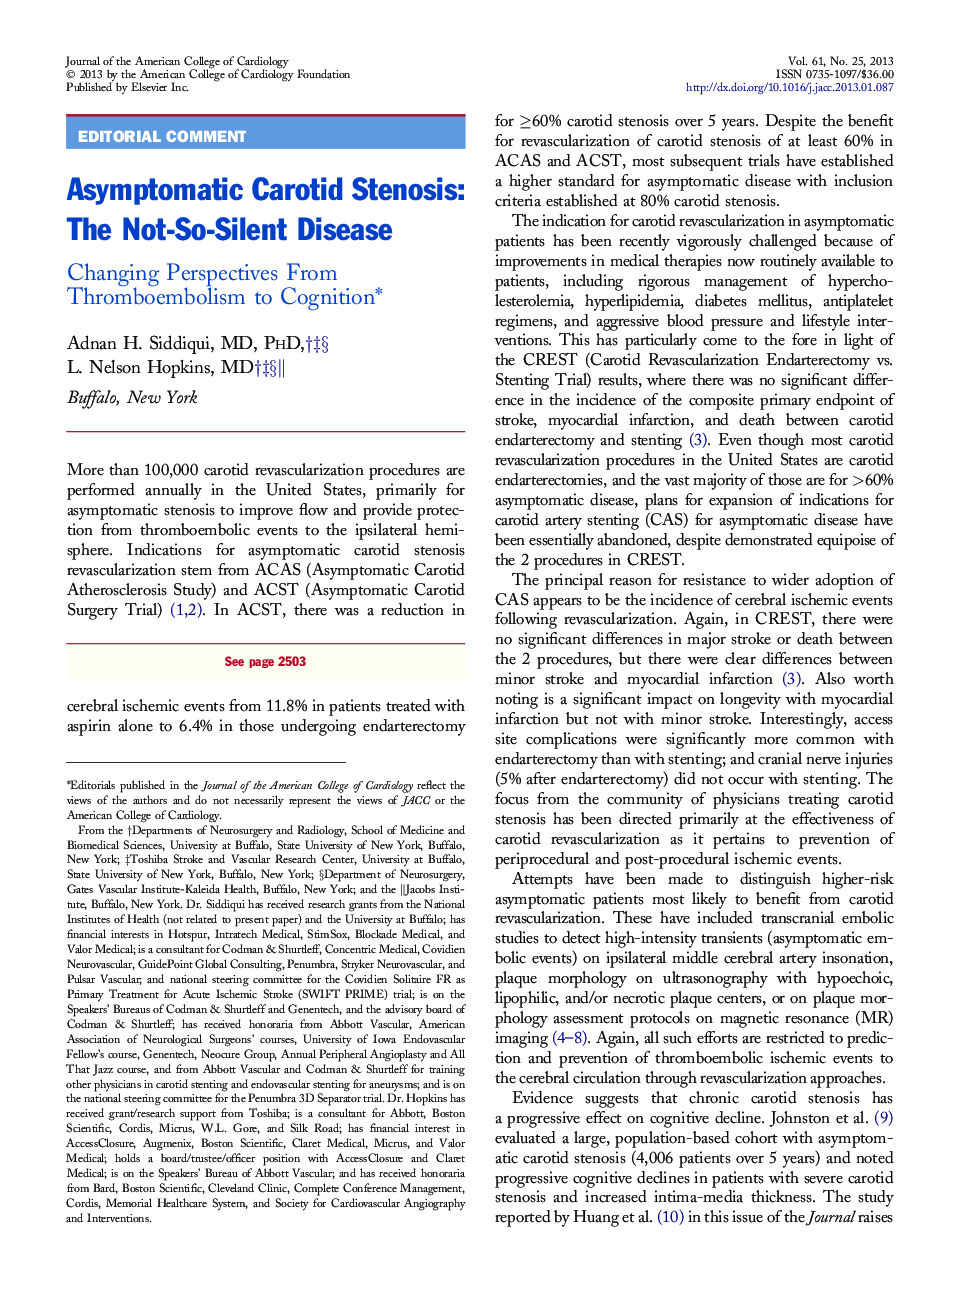 Asymptomatic Carotid Stenosis: The Not-So-Silent Disease